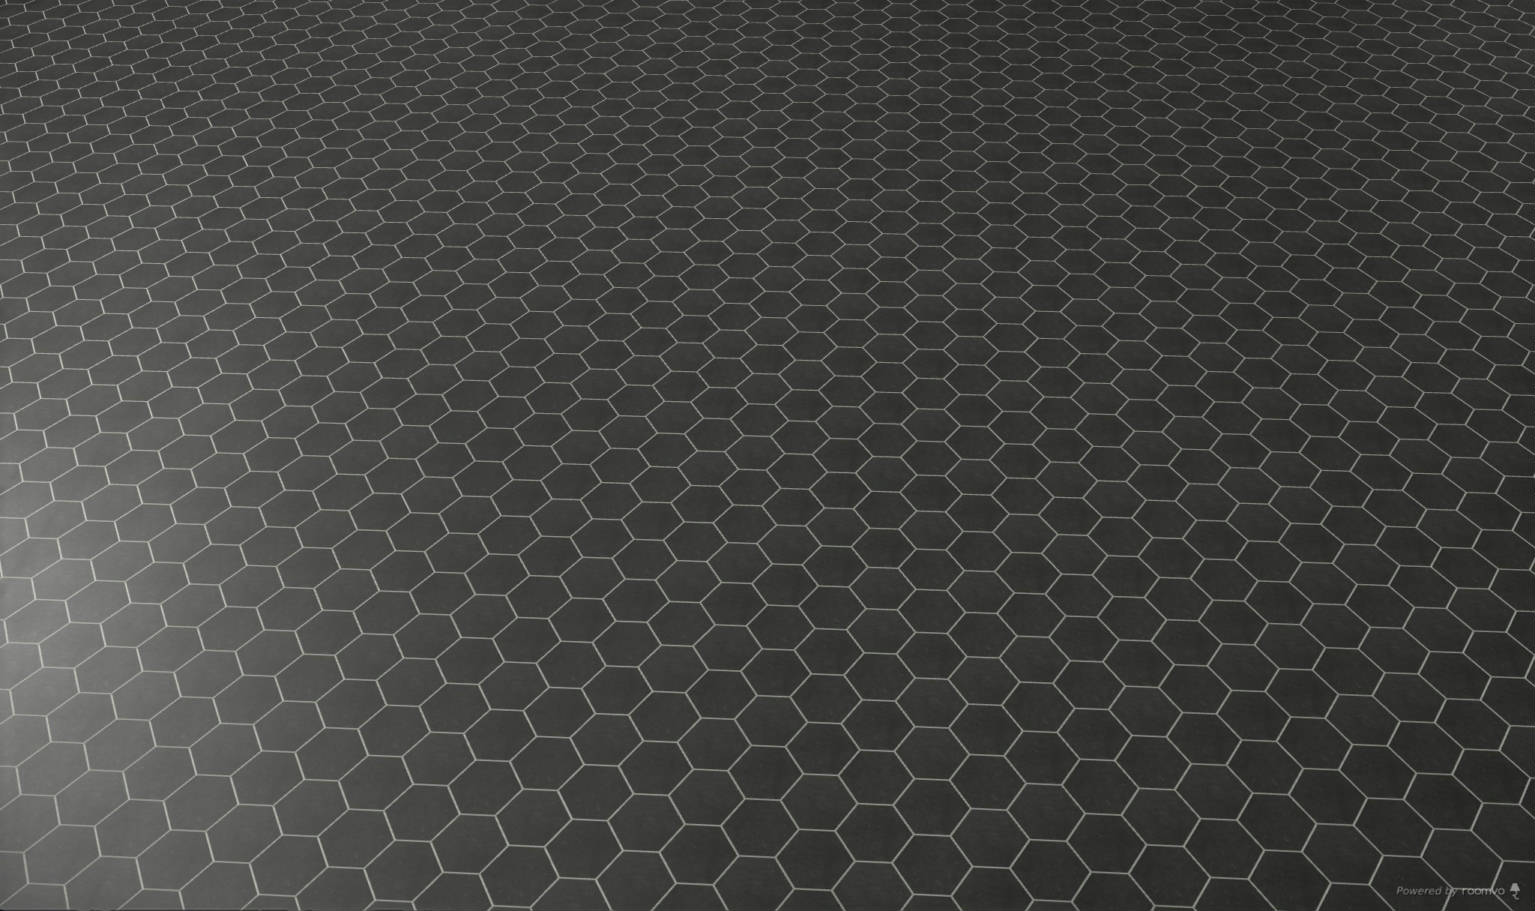 Ashland Black Hexagon 3X3" Mosaic | Qualis Ceramica | Luxury Tile and Vinyl at affordable prices